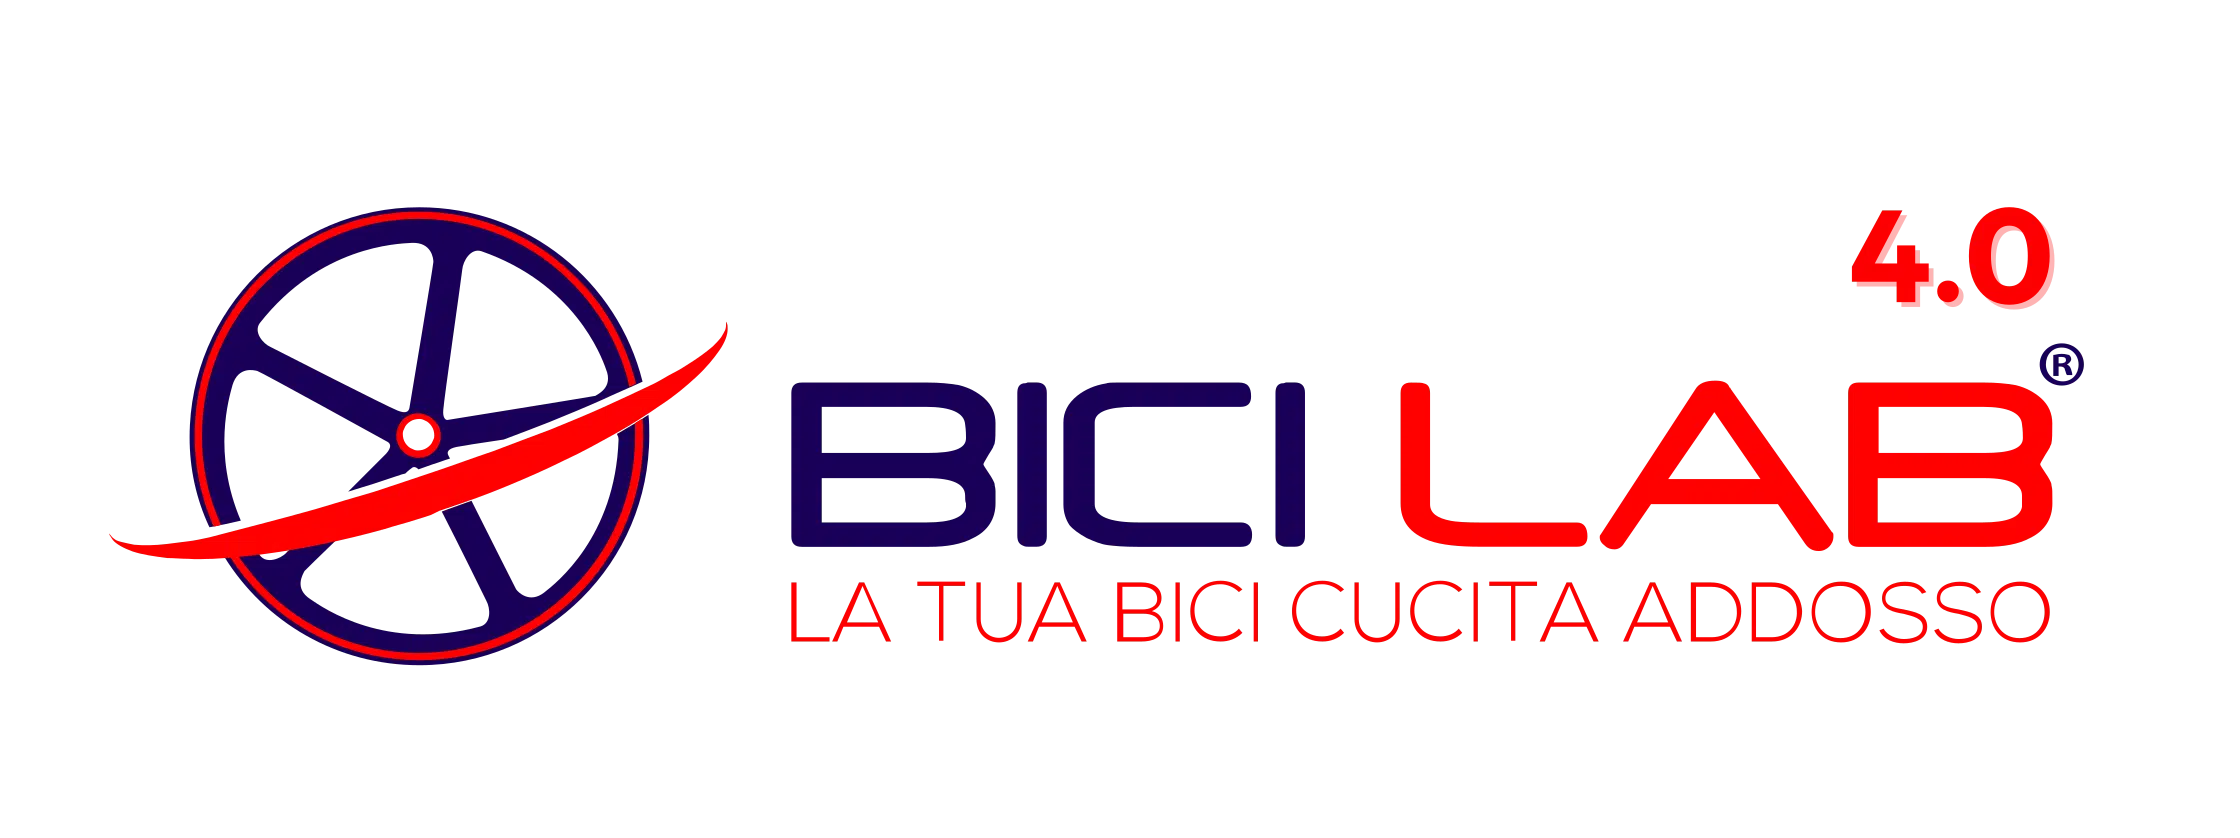 Bici Lab